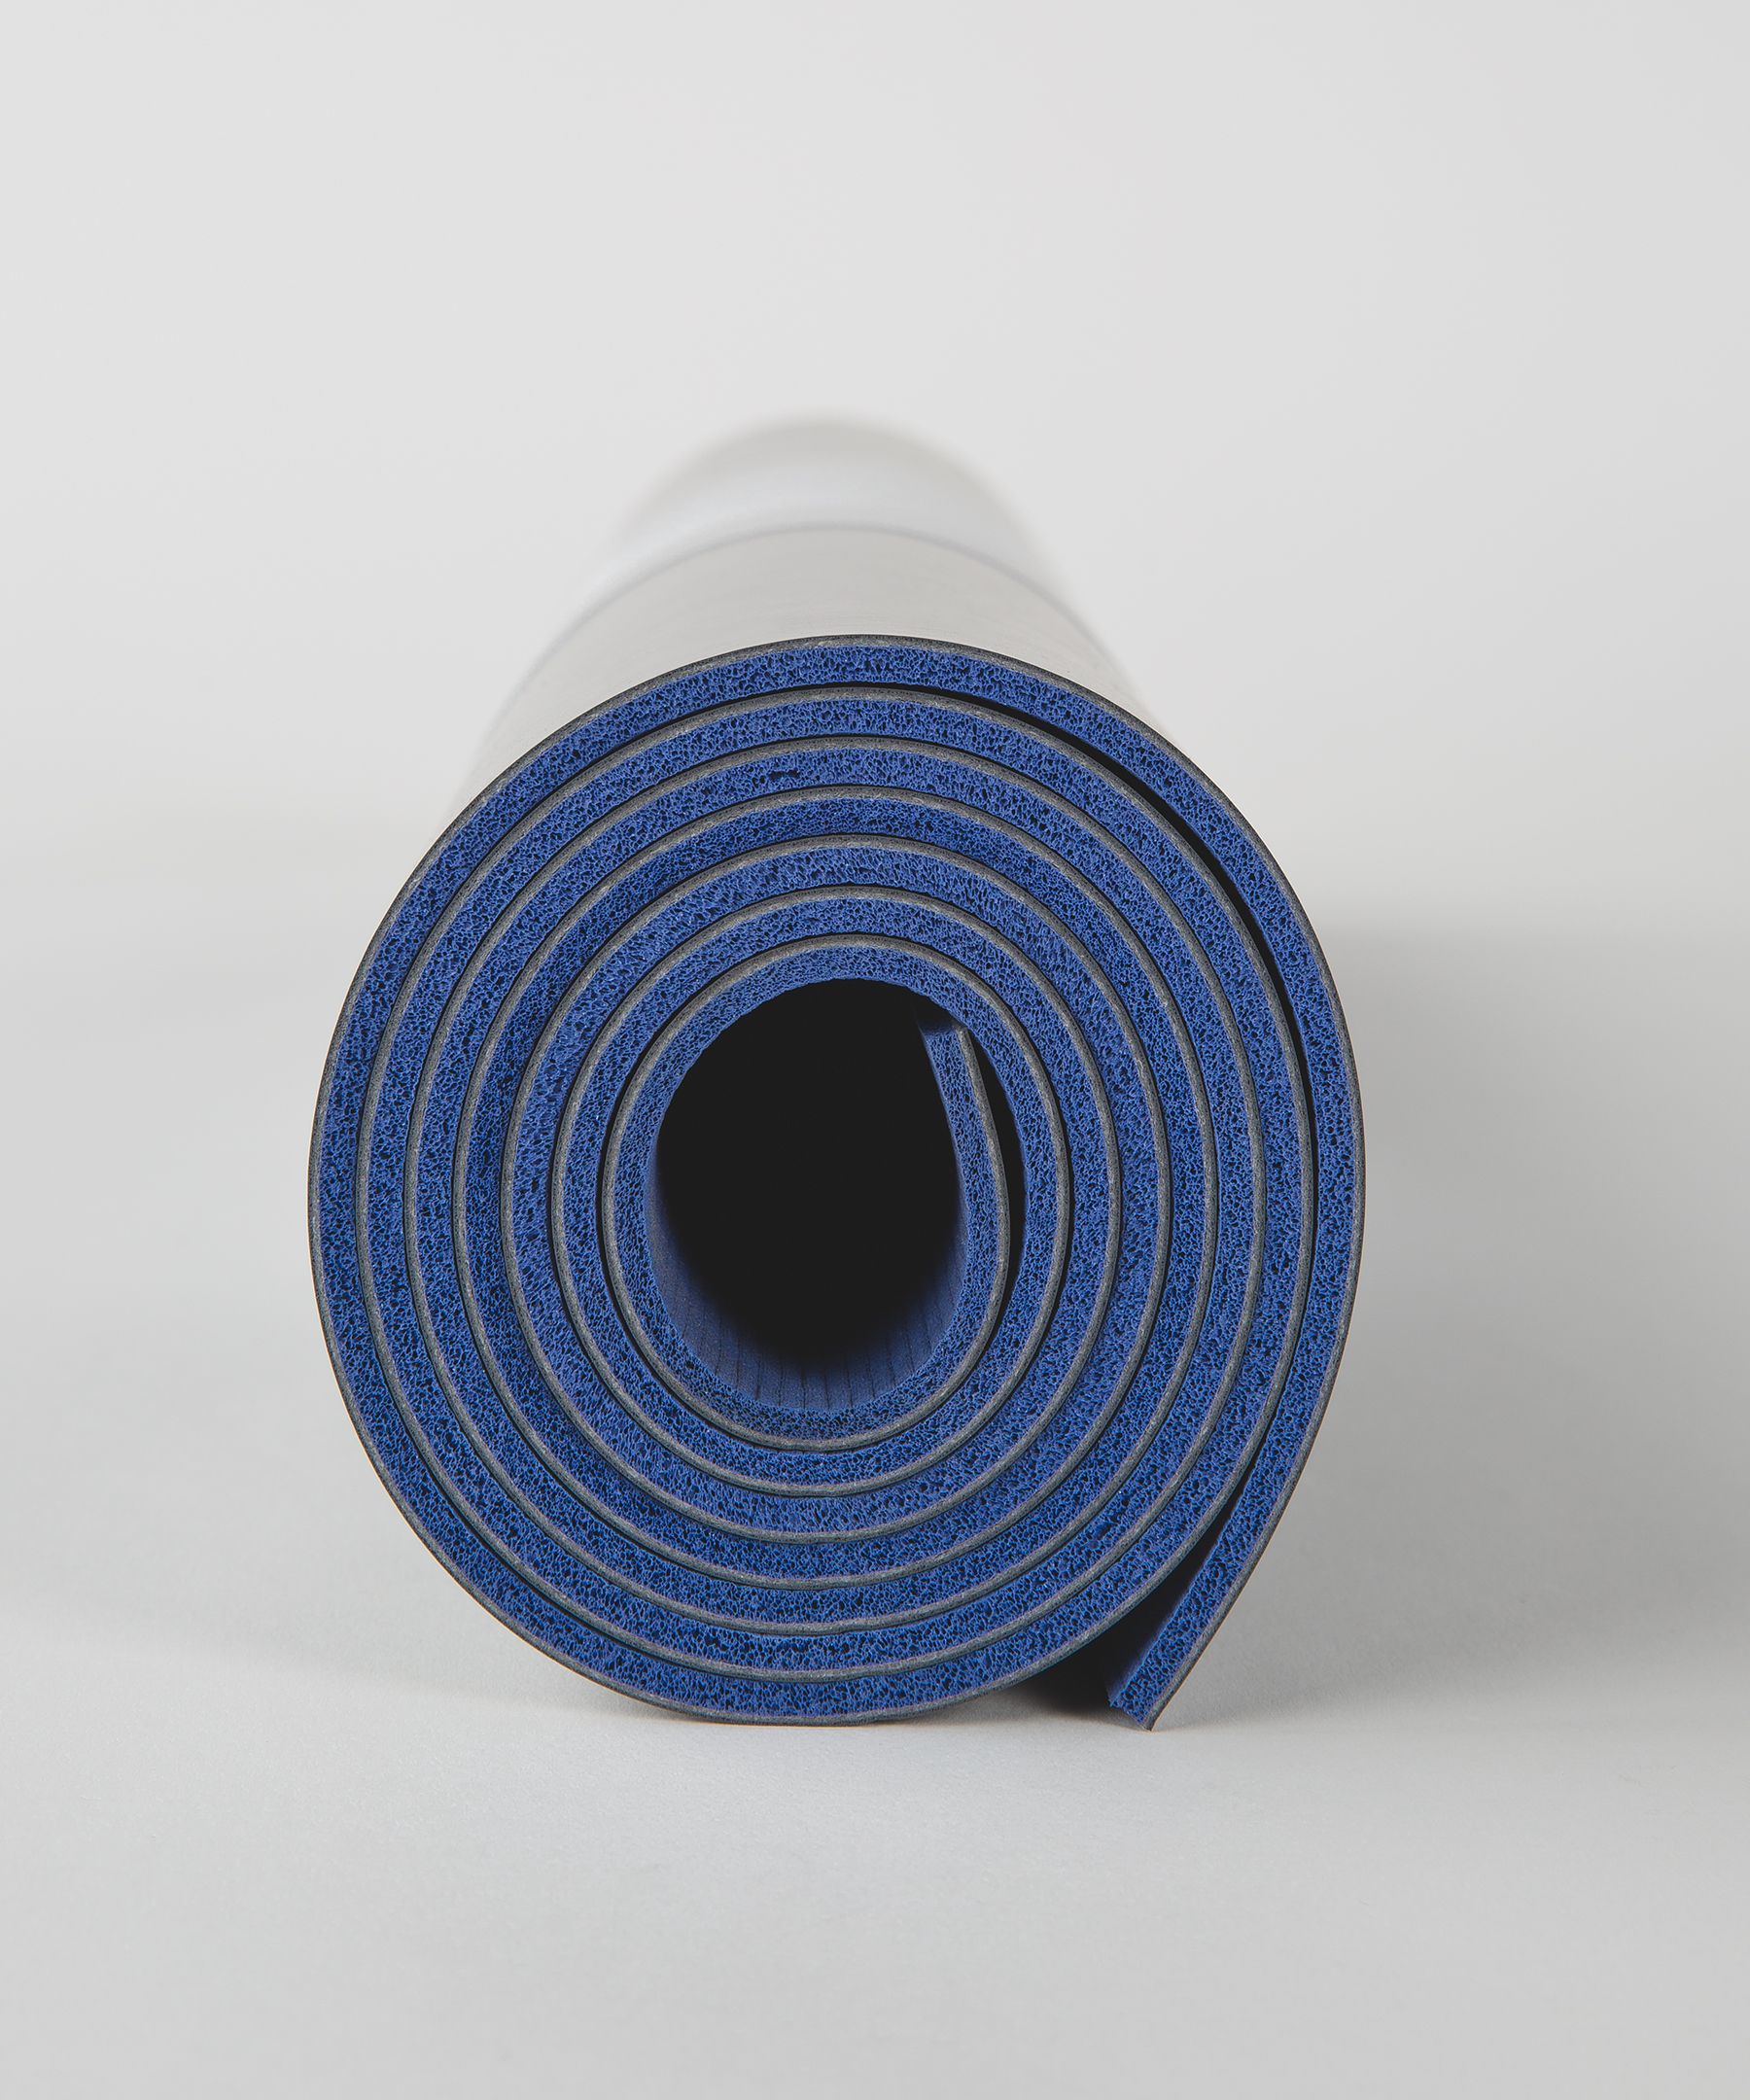 lululemon yoga mat 5mm